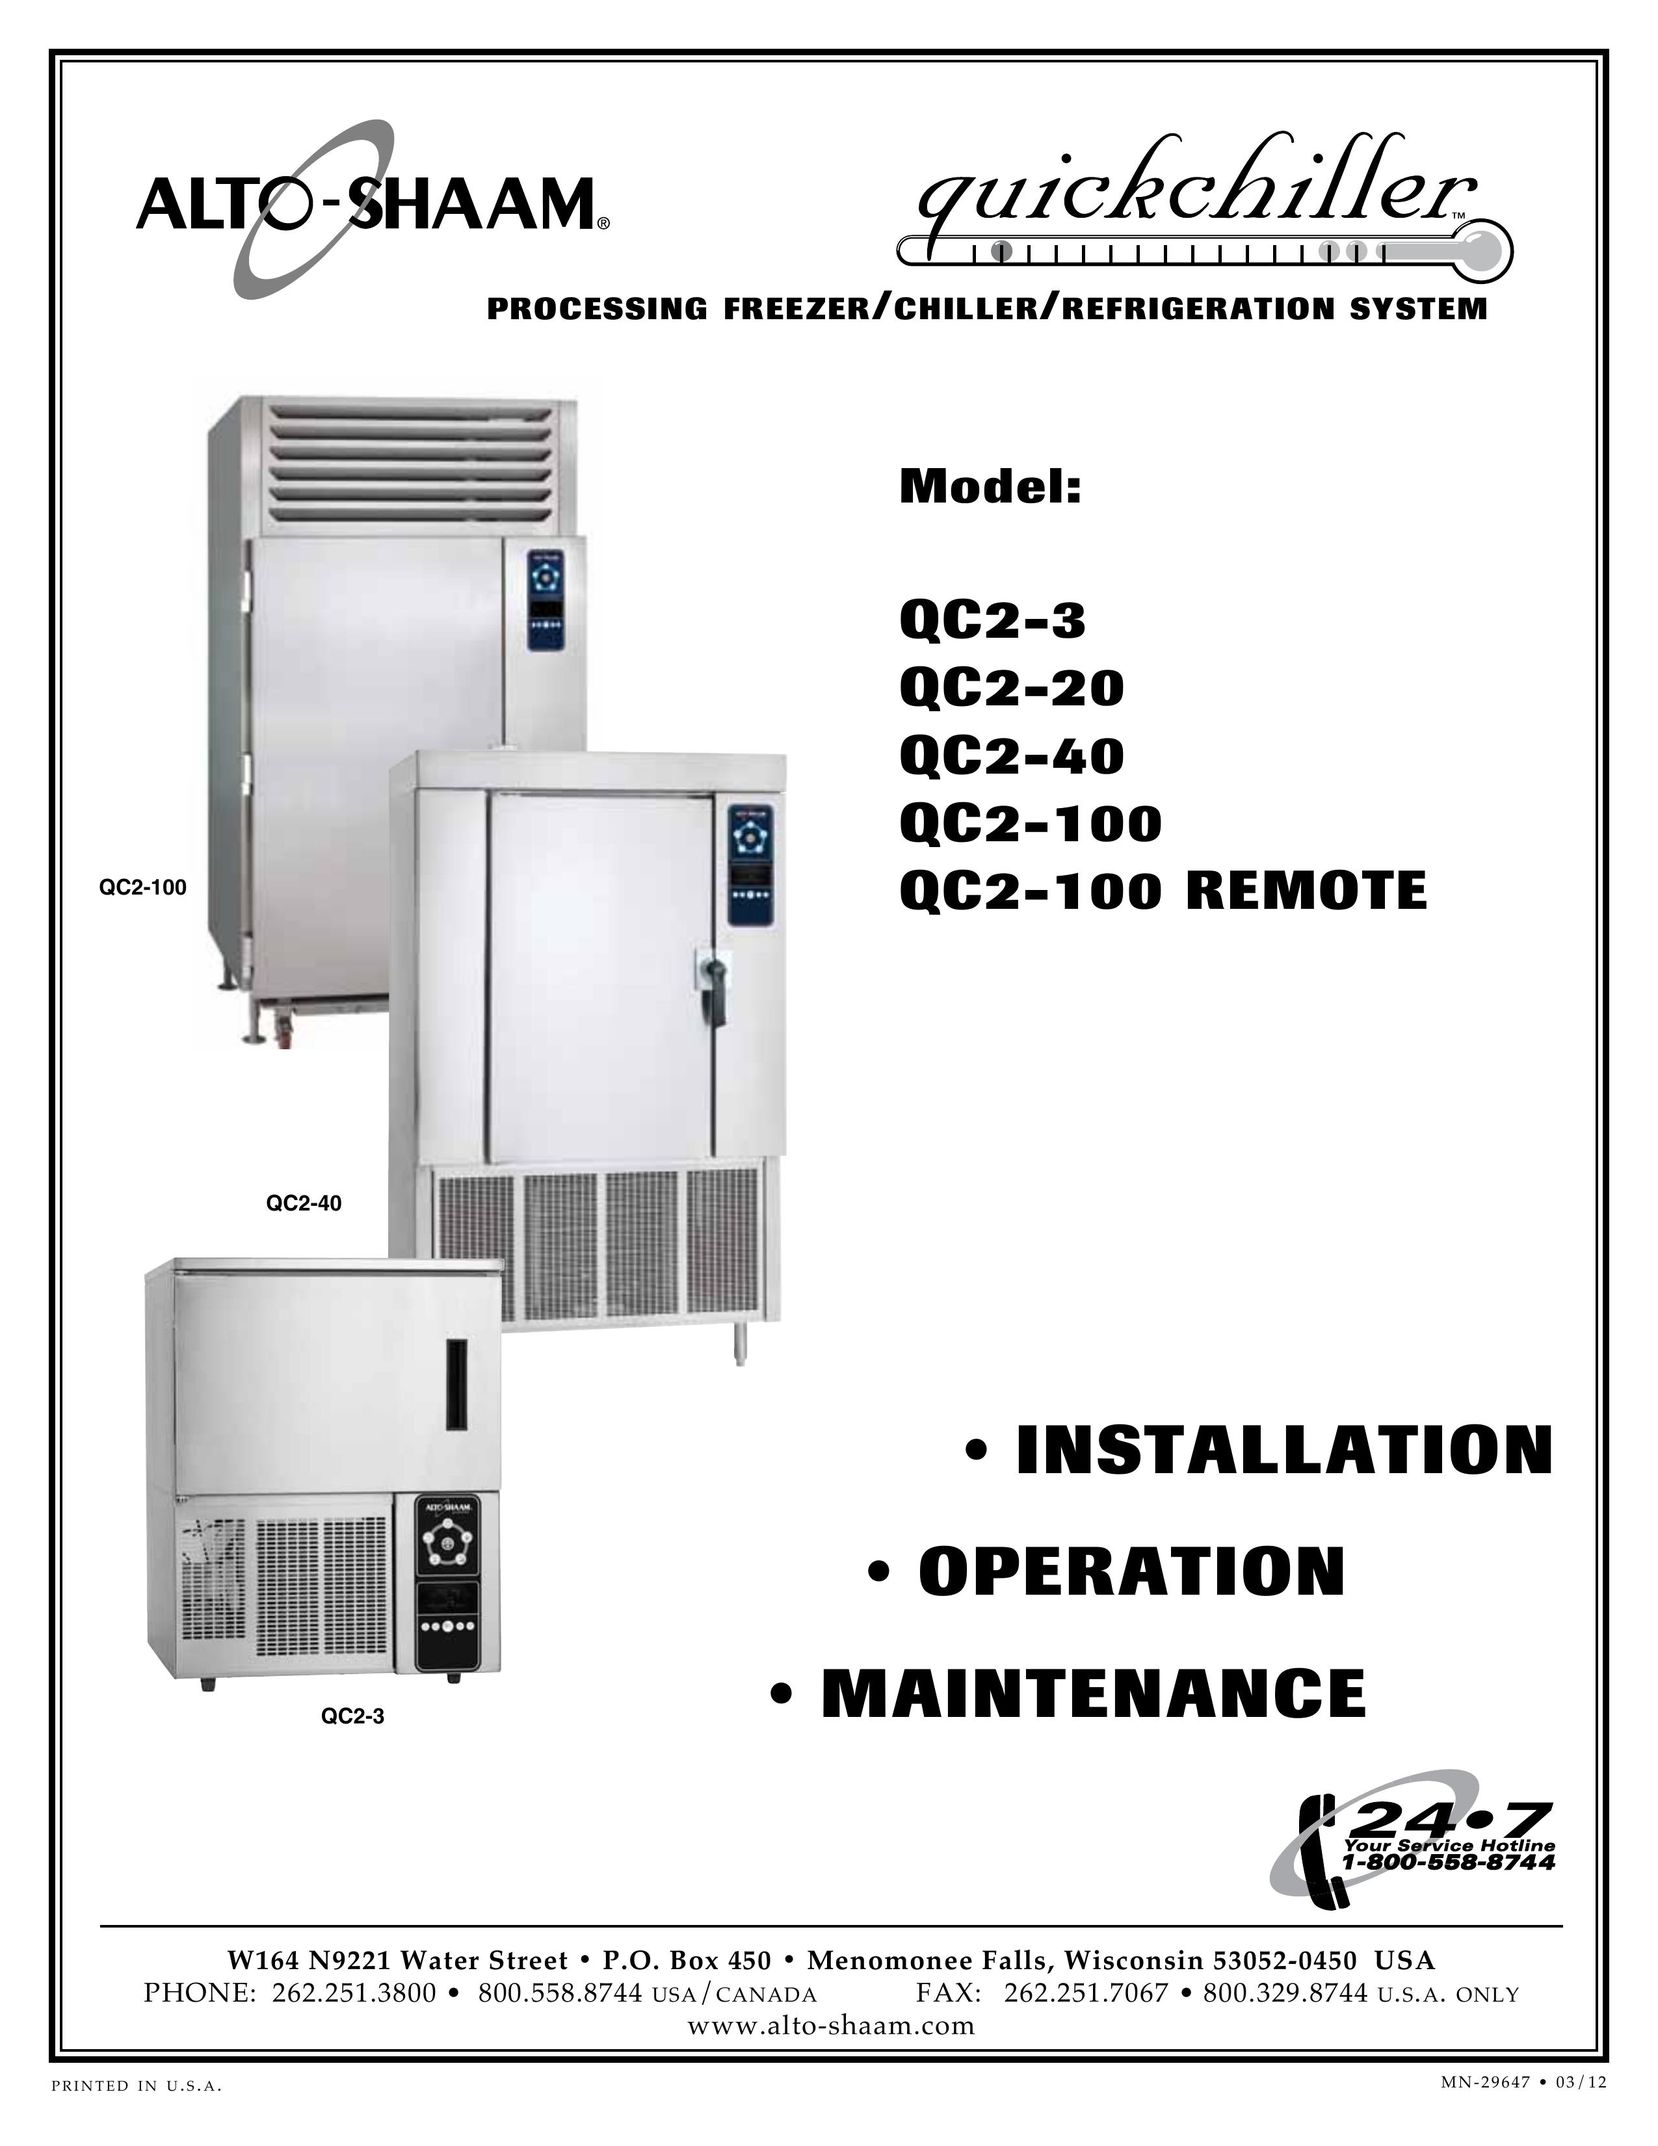 Alto-Shaam QC2-100 REMOTE Freezer User Manual